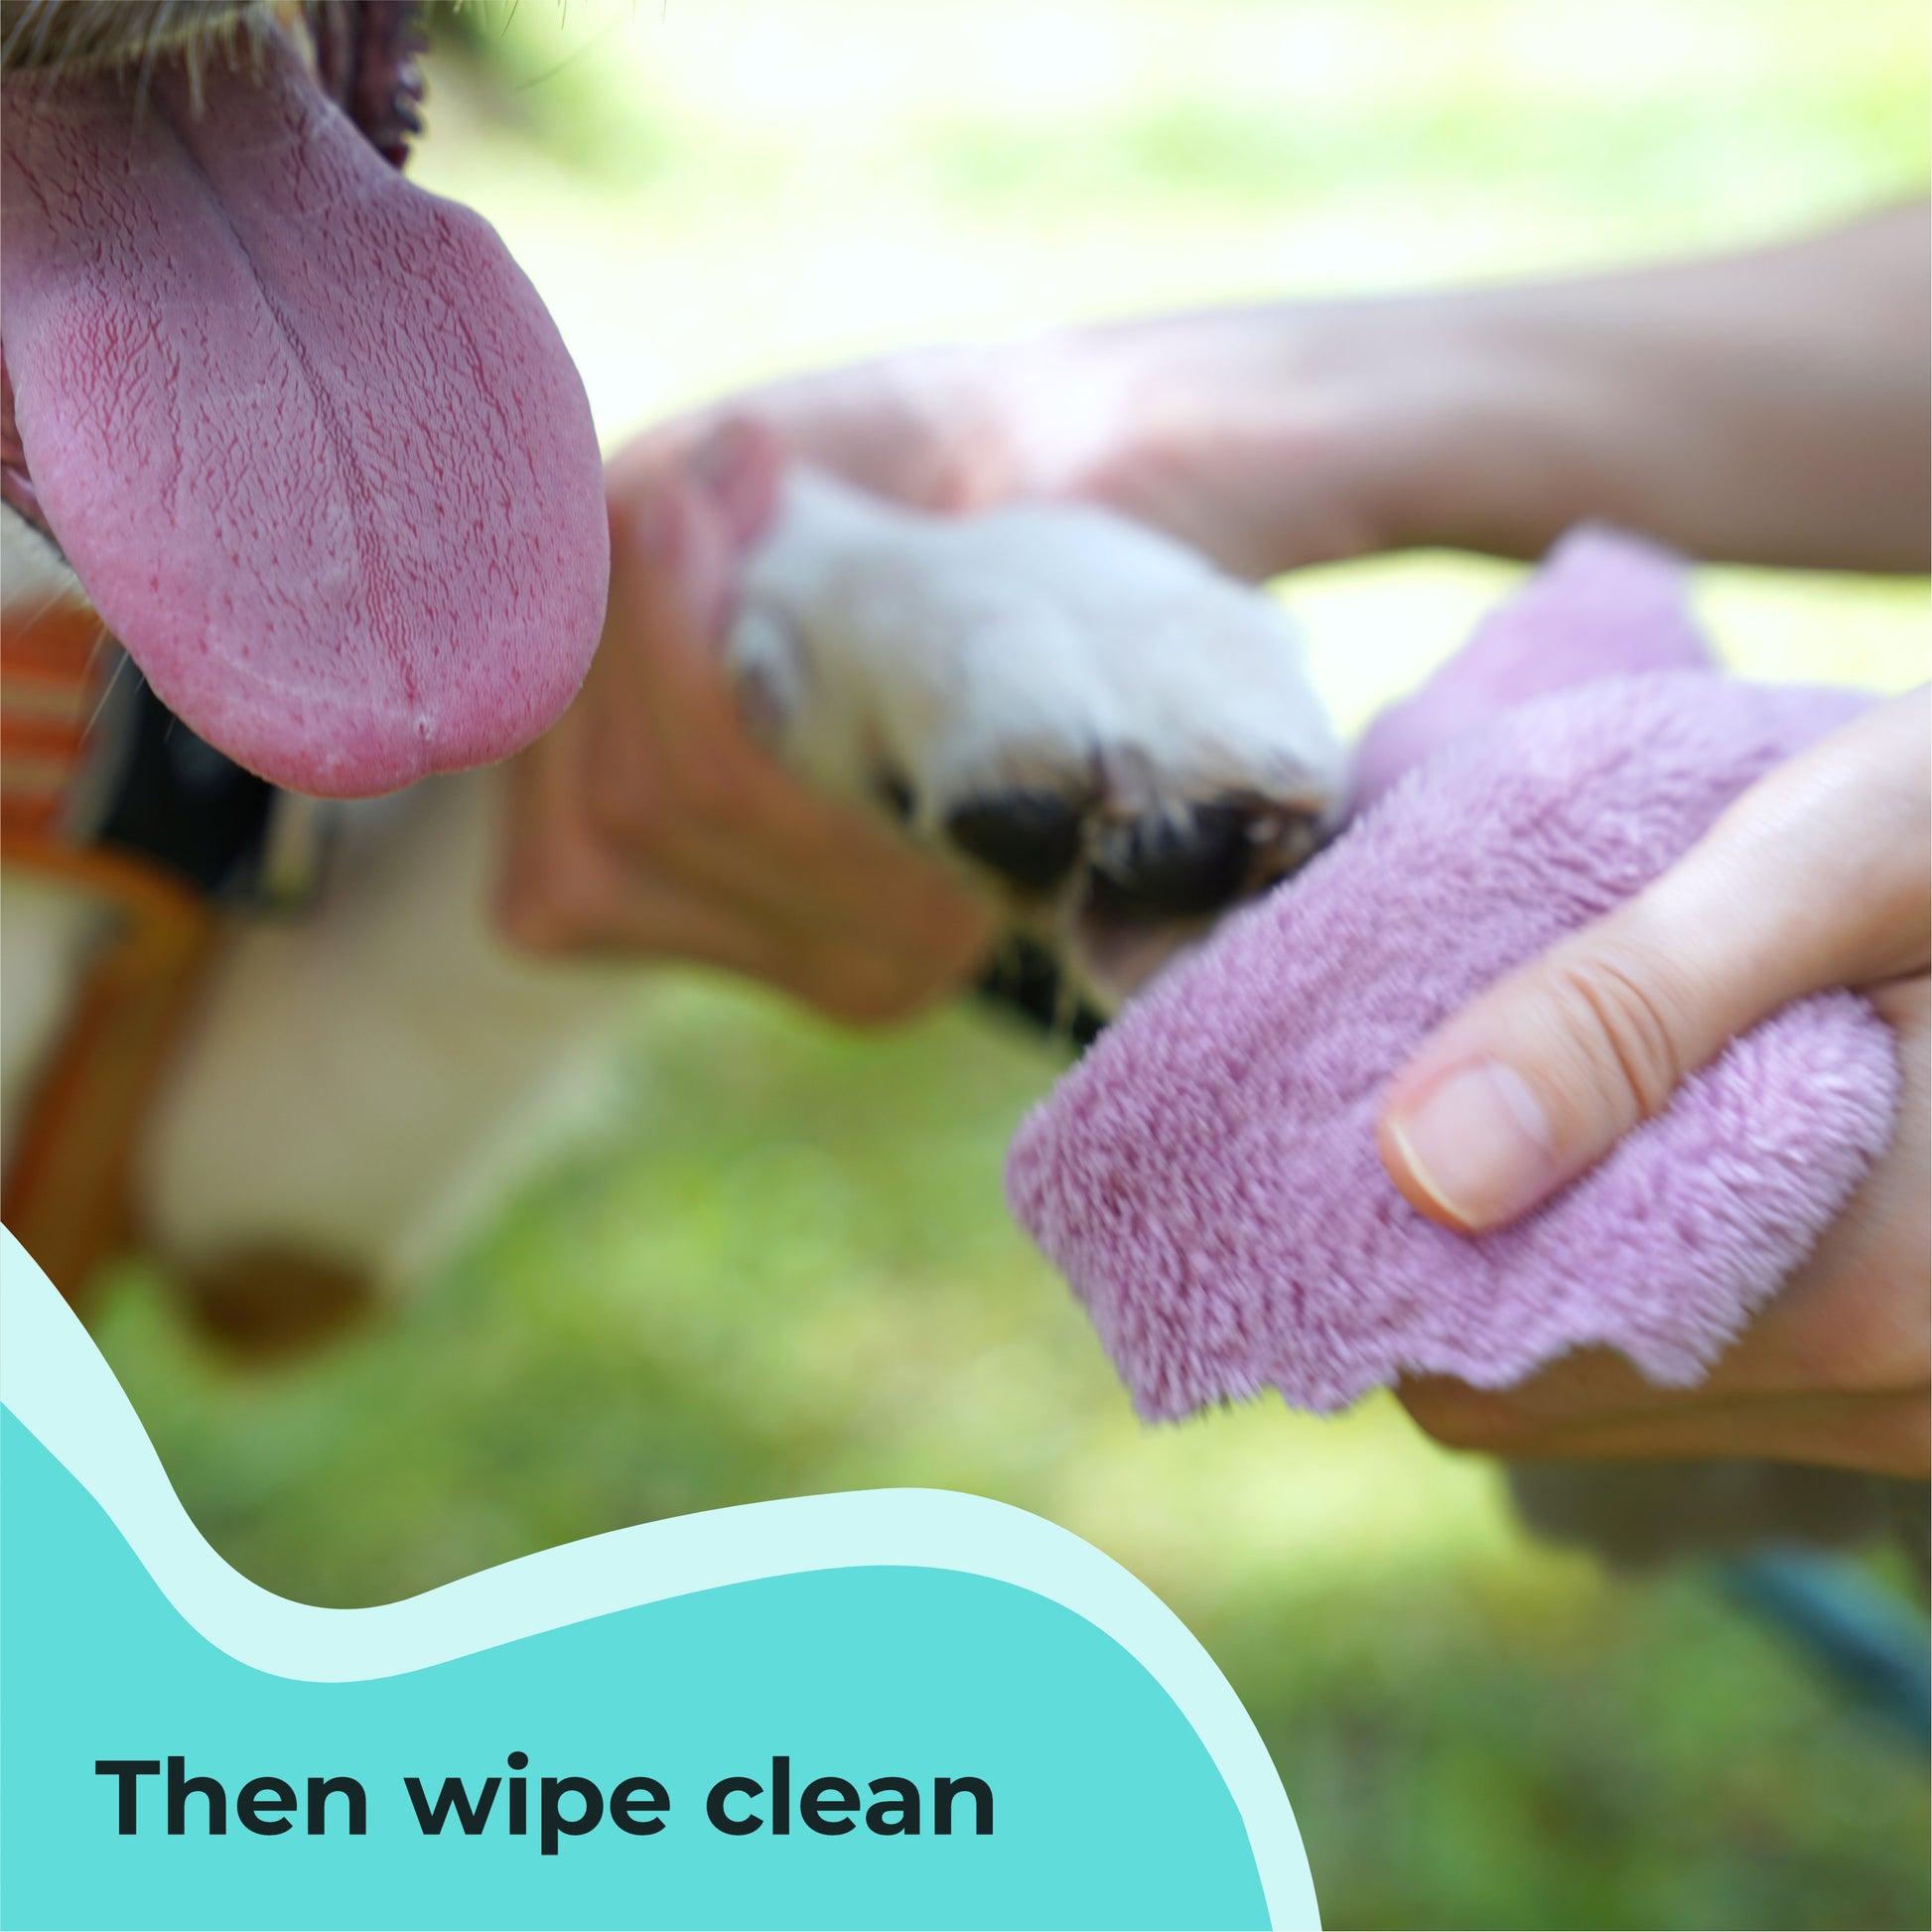 Then wipe clean